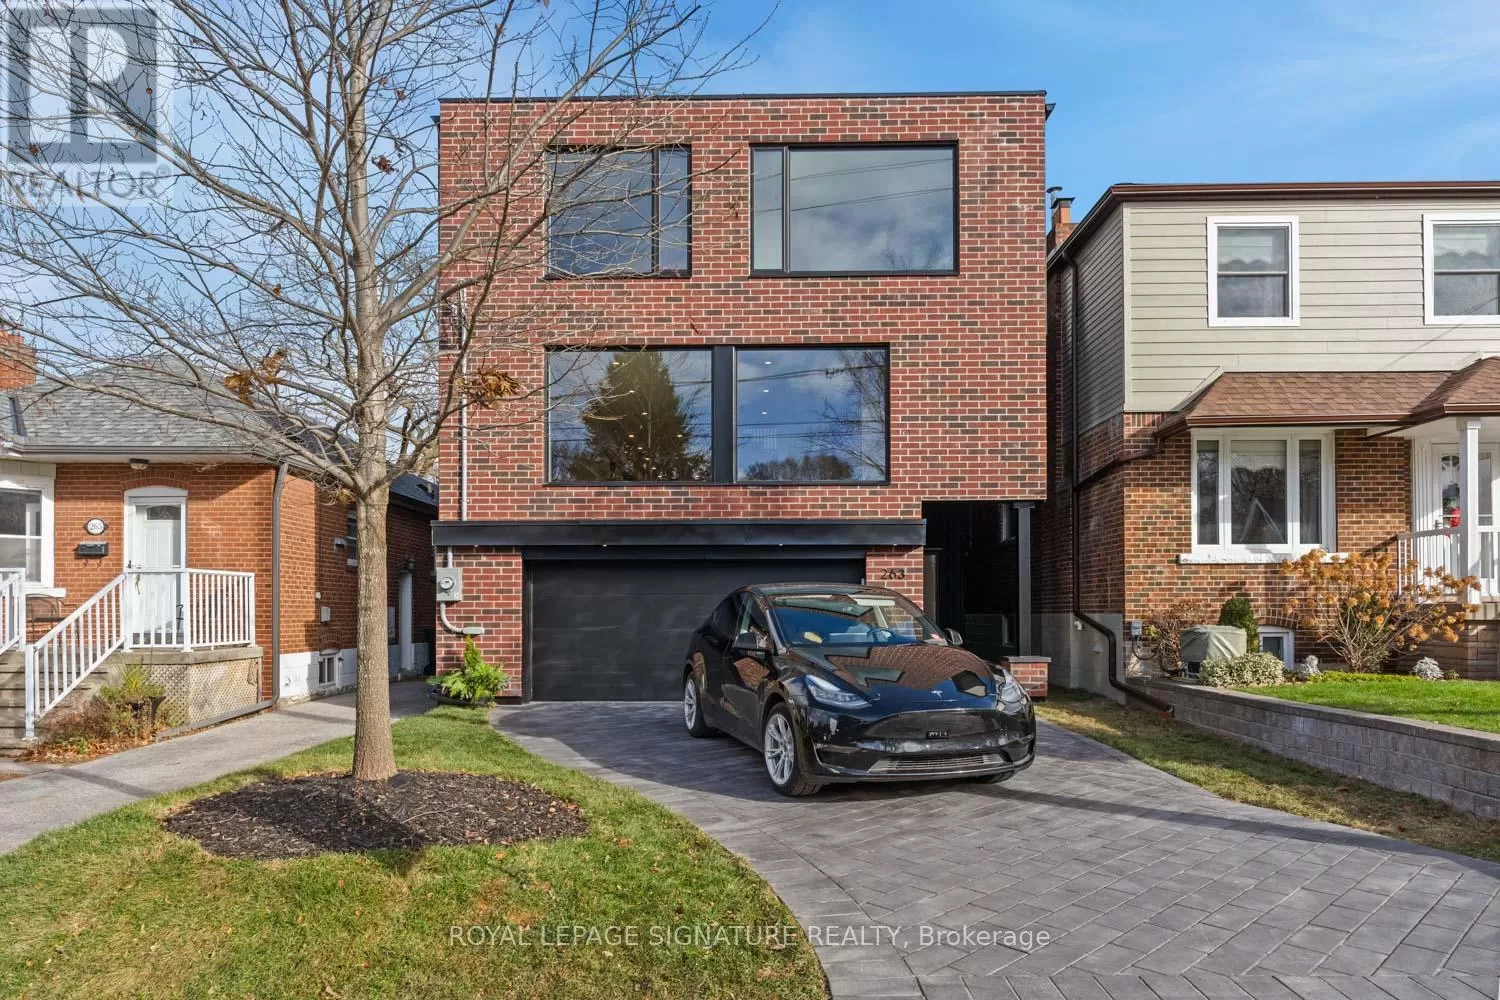 House for rent: 263 Blantyre Avenue, Toronto, Ontario M1N 2S2